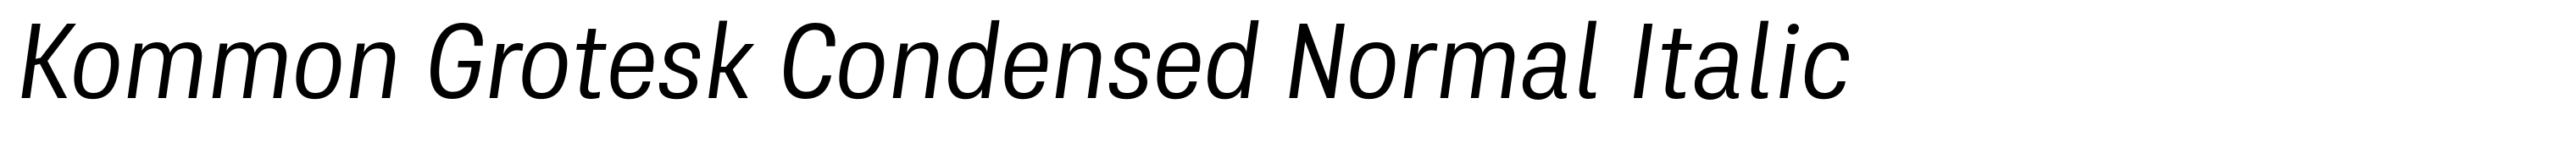 Kommon Grotesk Condensed Normal Italic